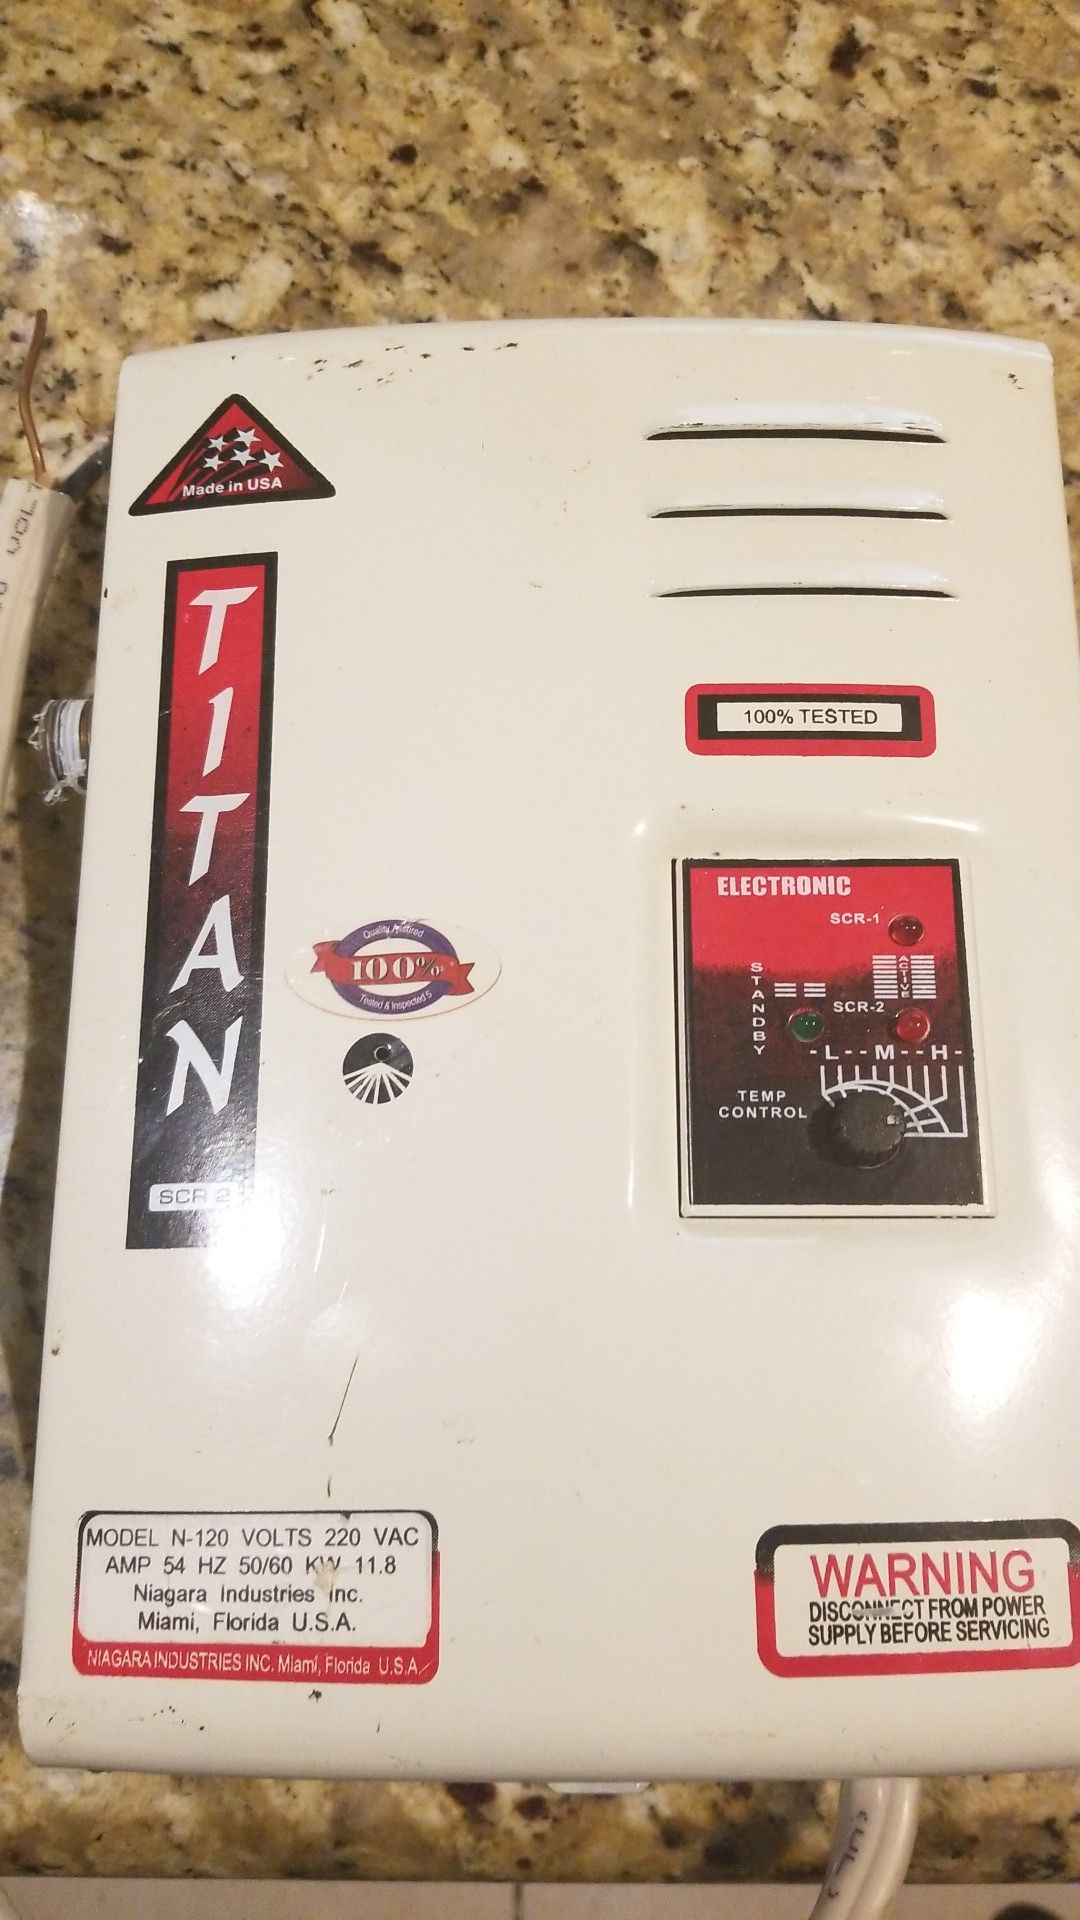 Titan Tankless water heater